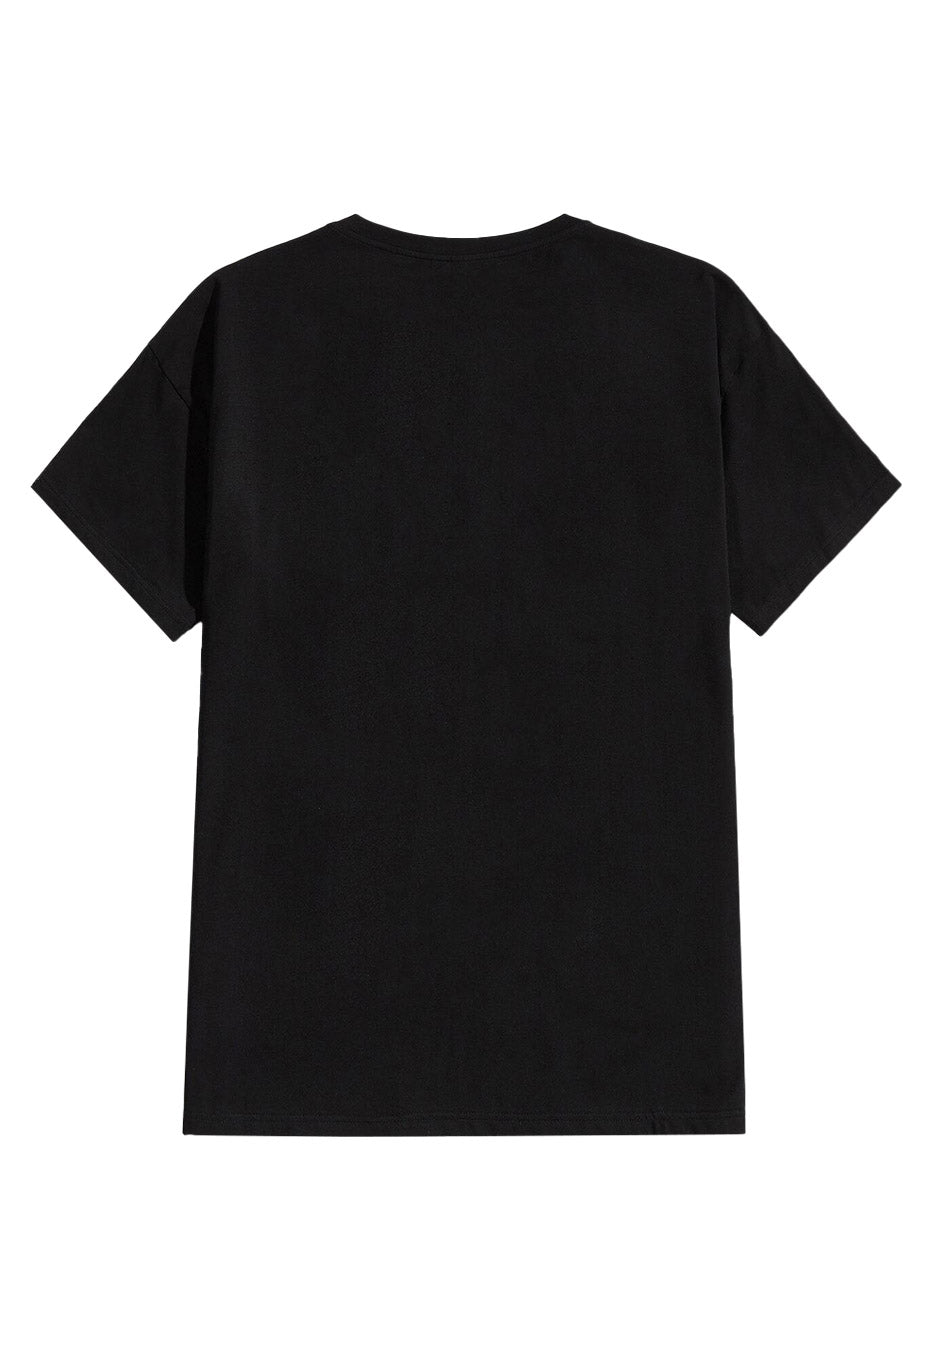 Pantera - Logo - T-Shirt